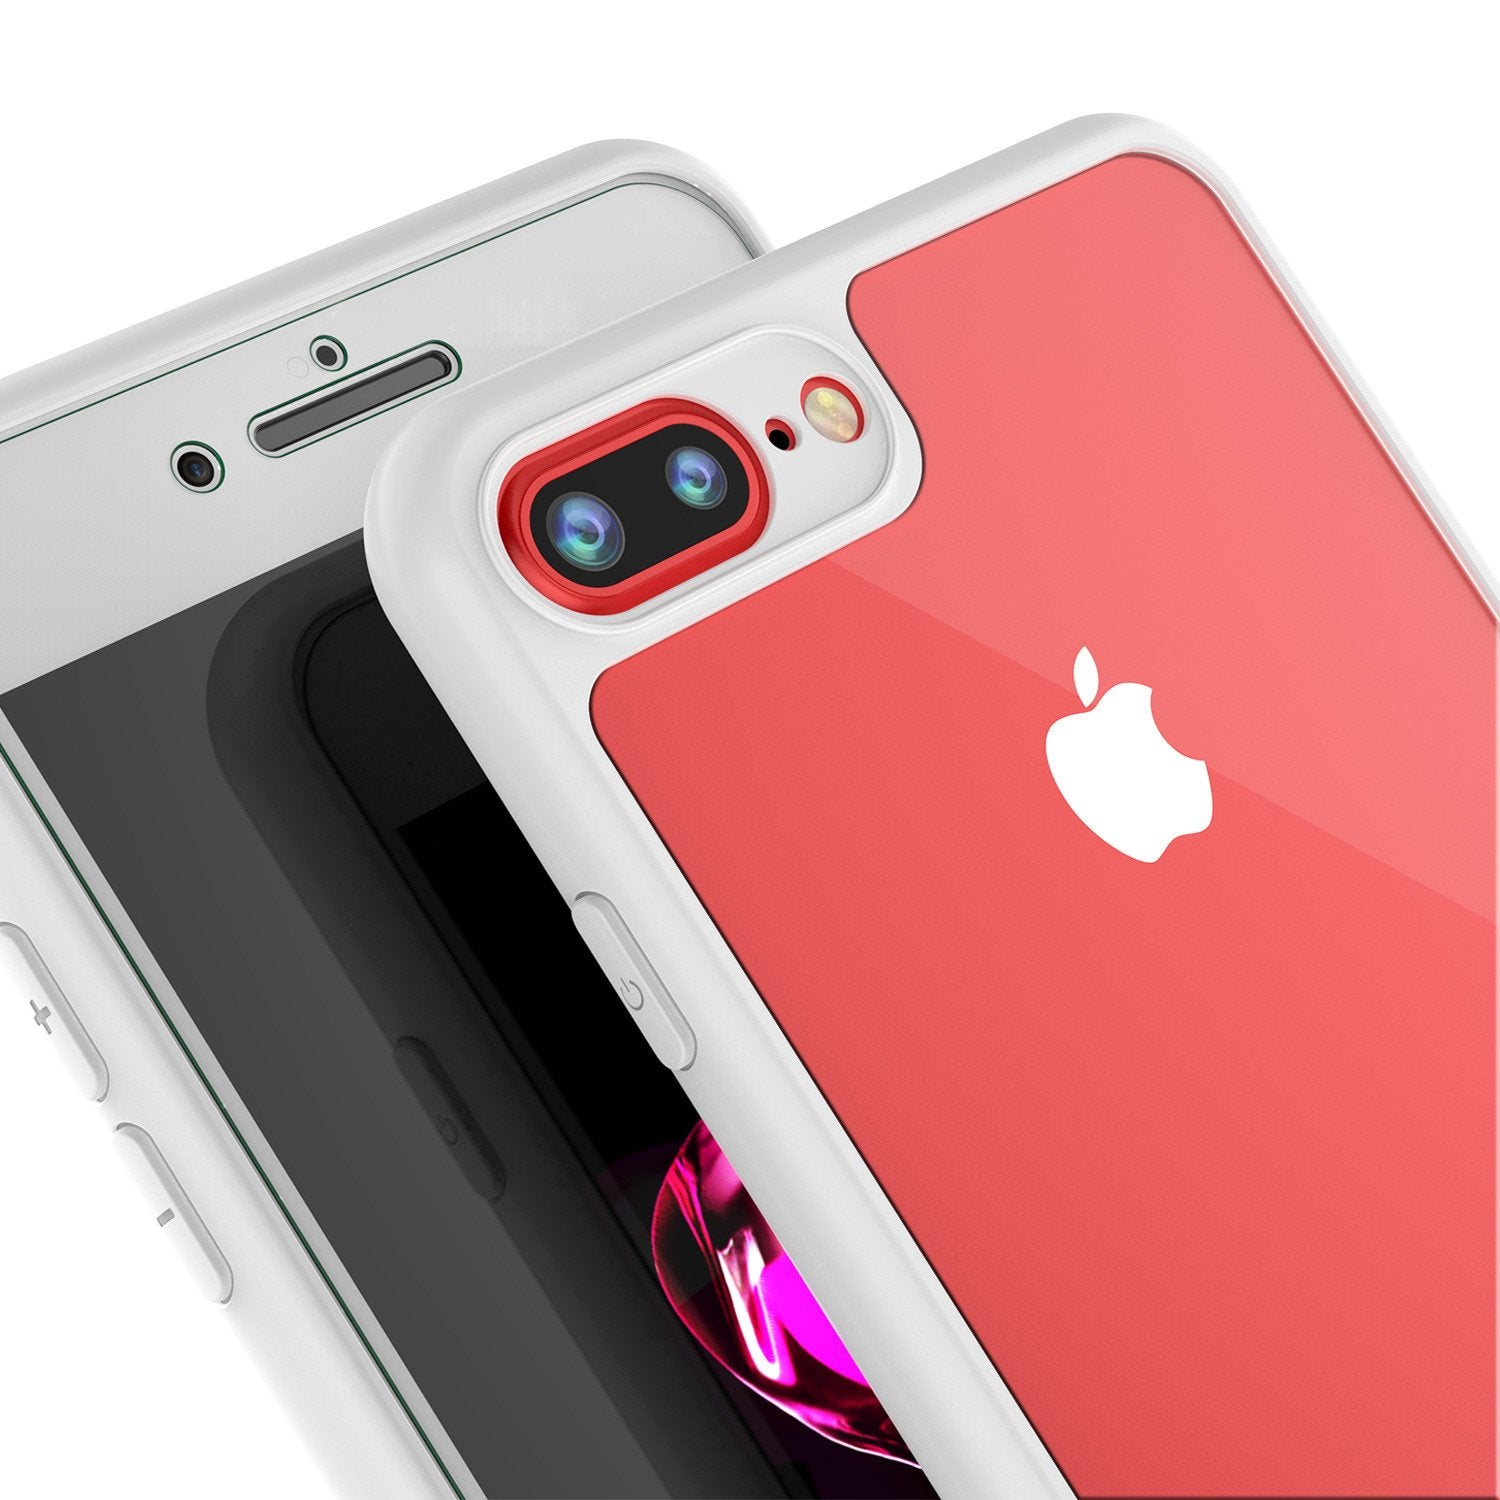 iPhone 8+ Plus Case [MASK Series] [PINK] Full Body Hybrid Dual